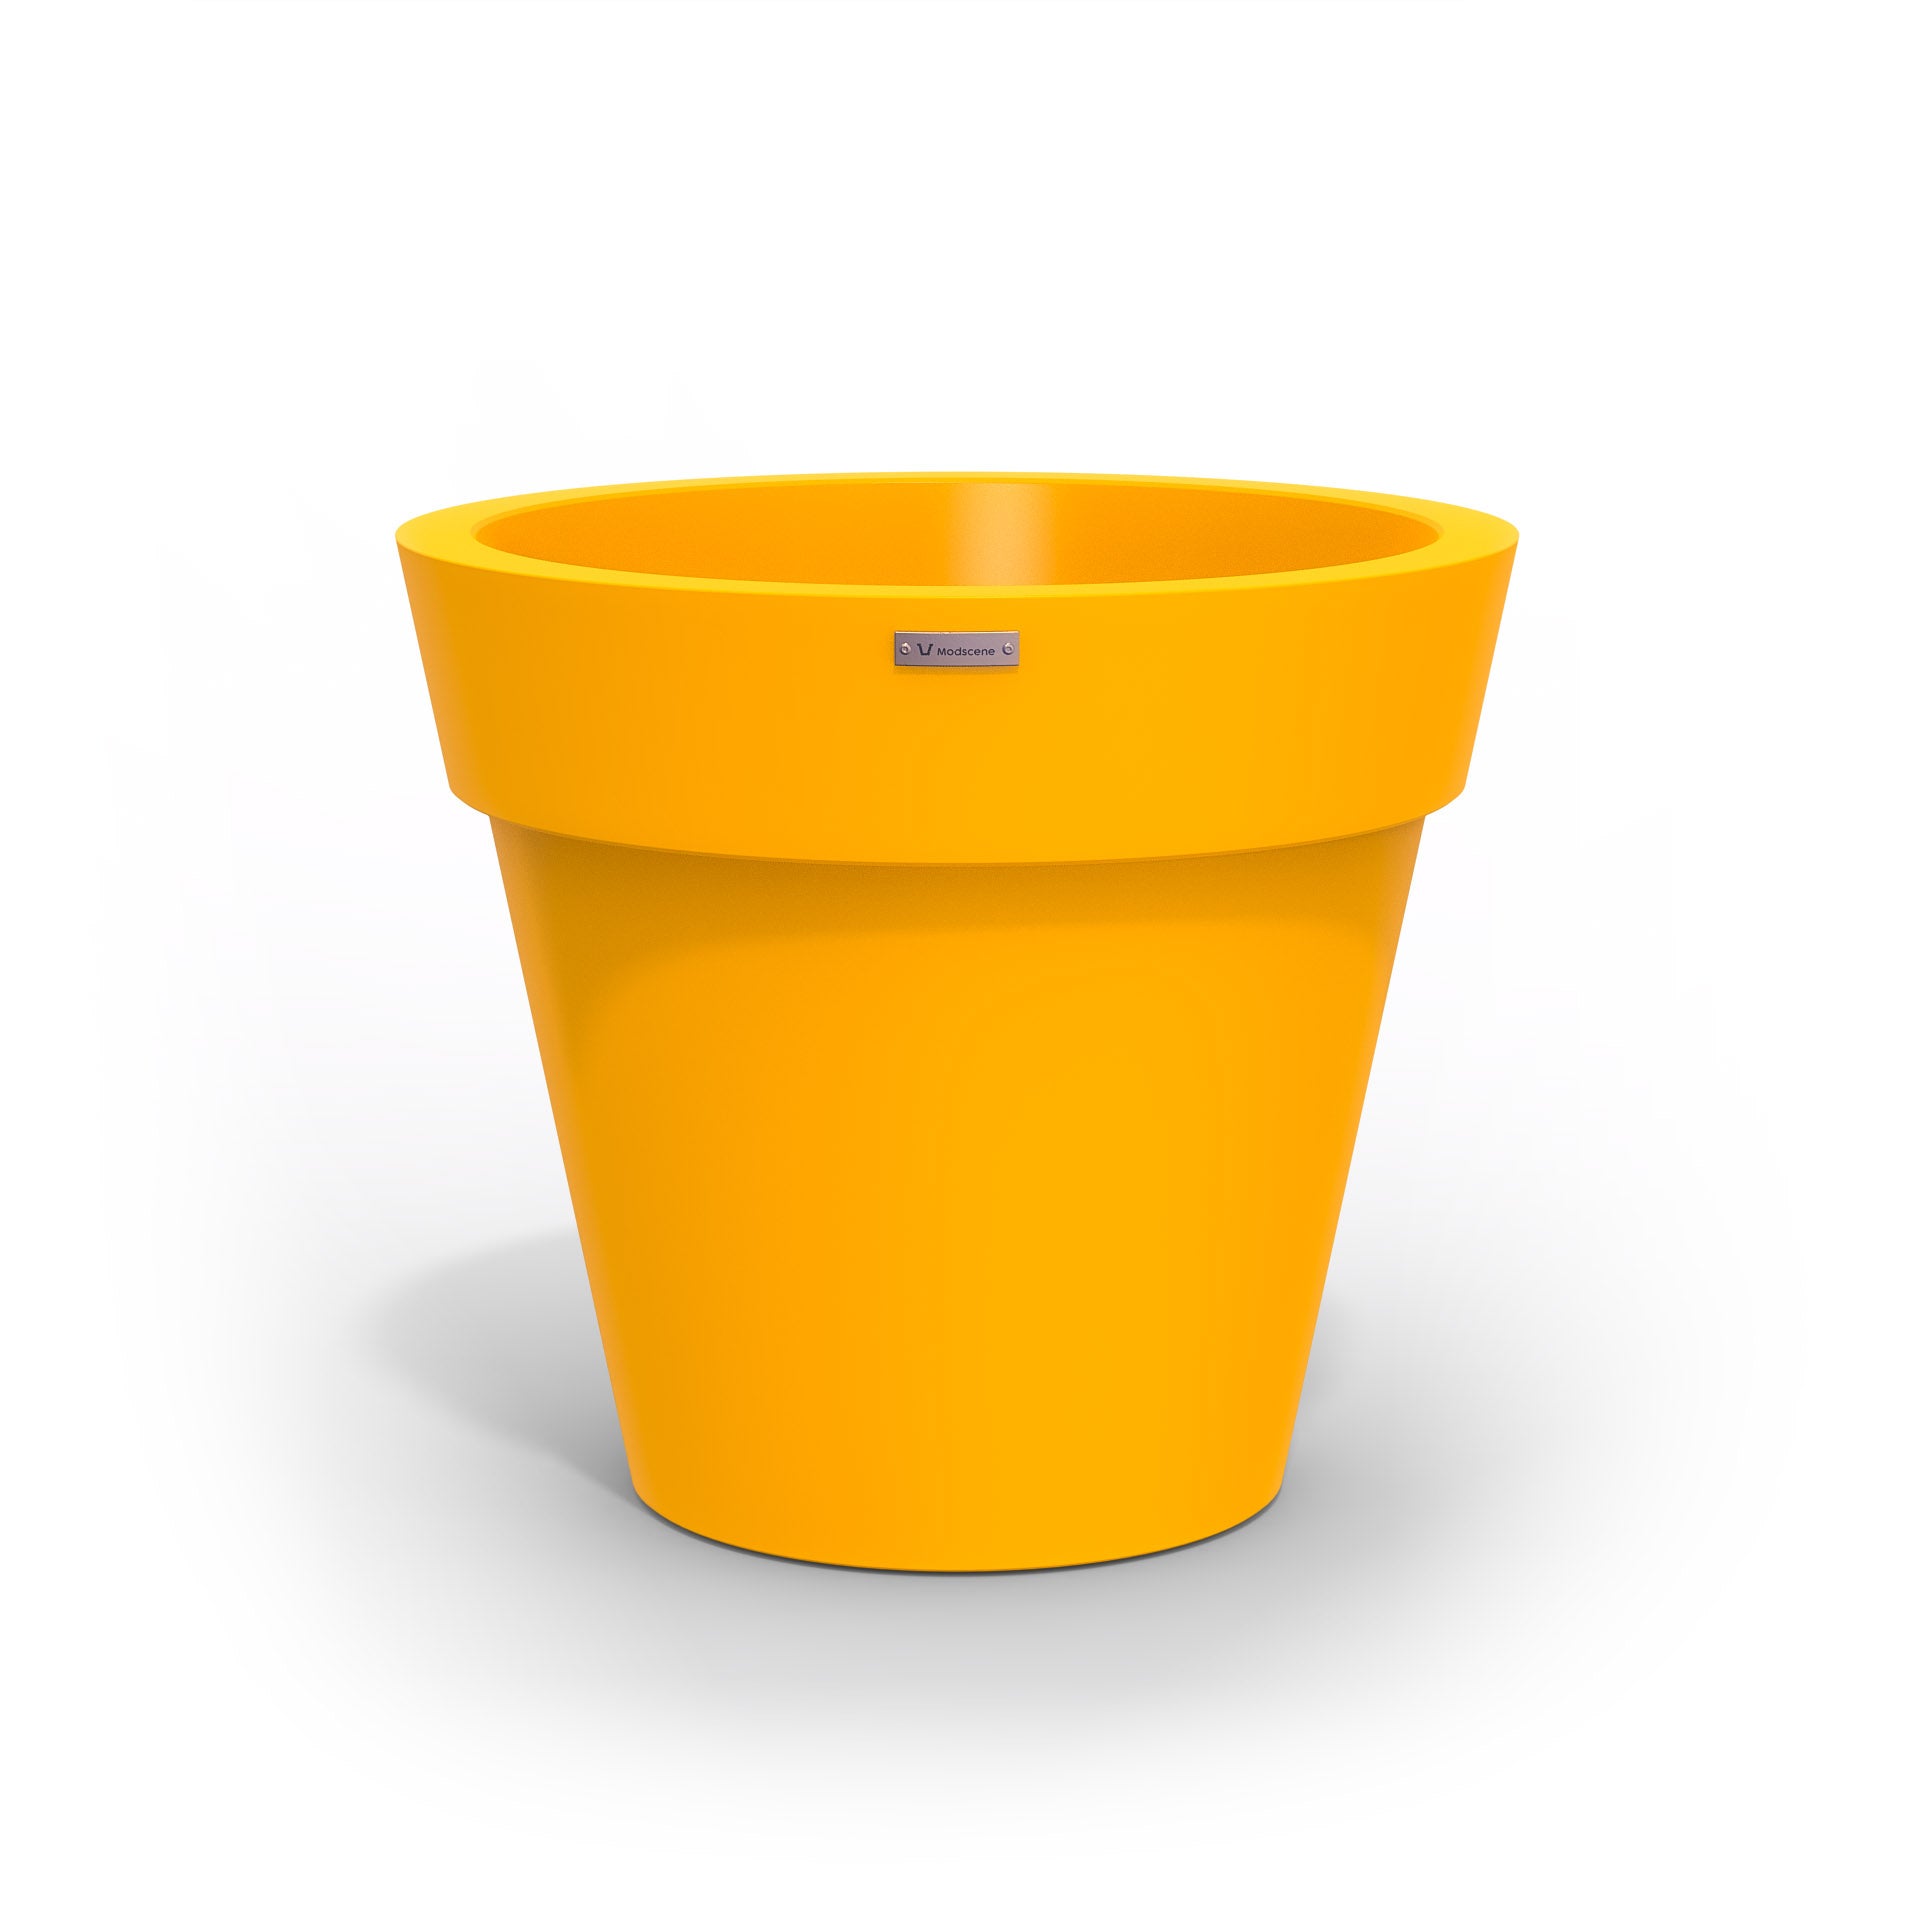 A yellow Modscene plastic planter pot made in NZ.